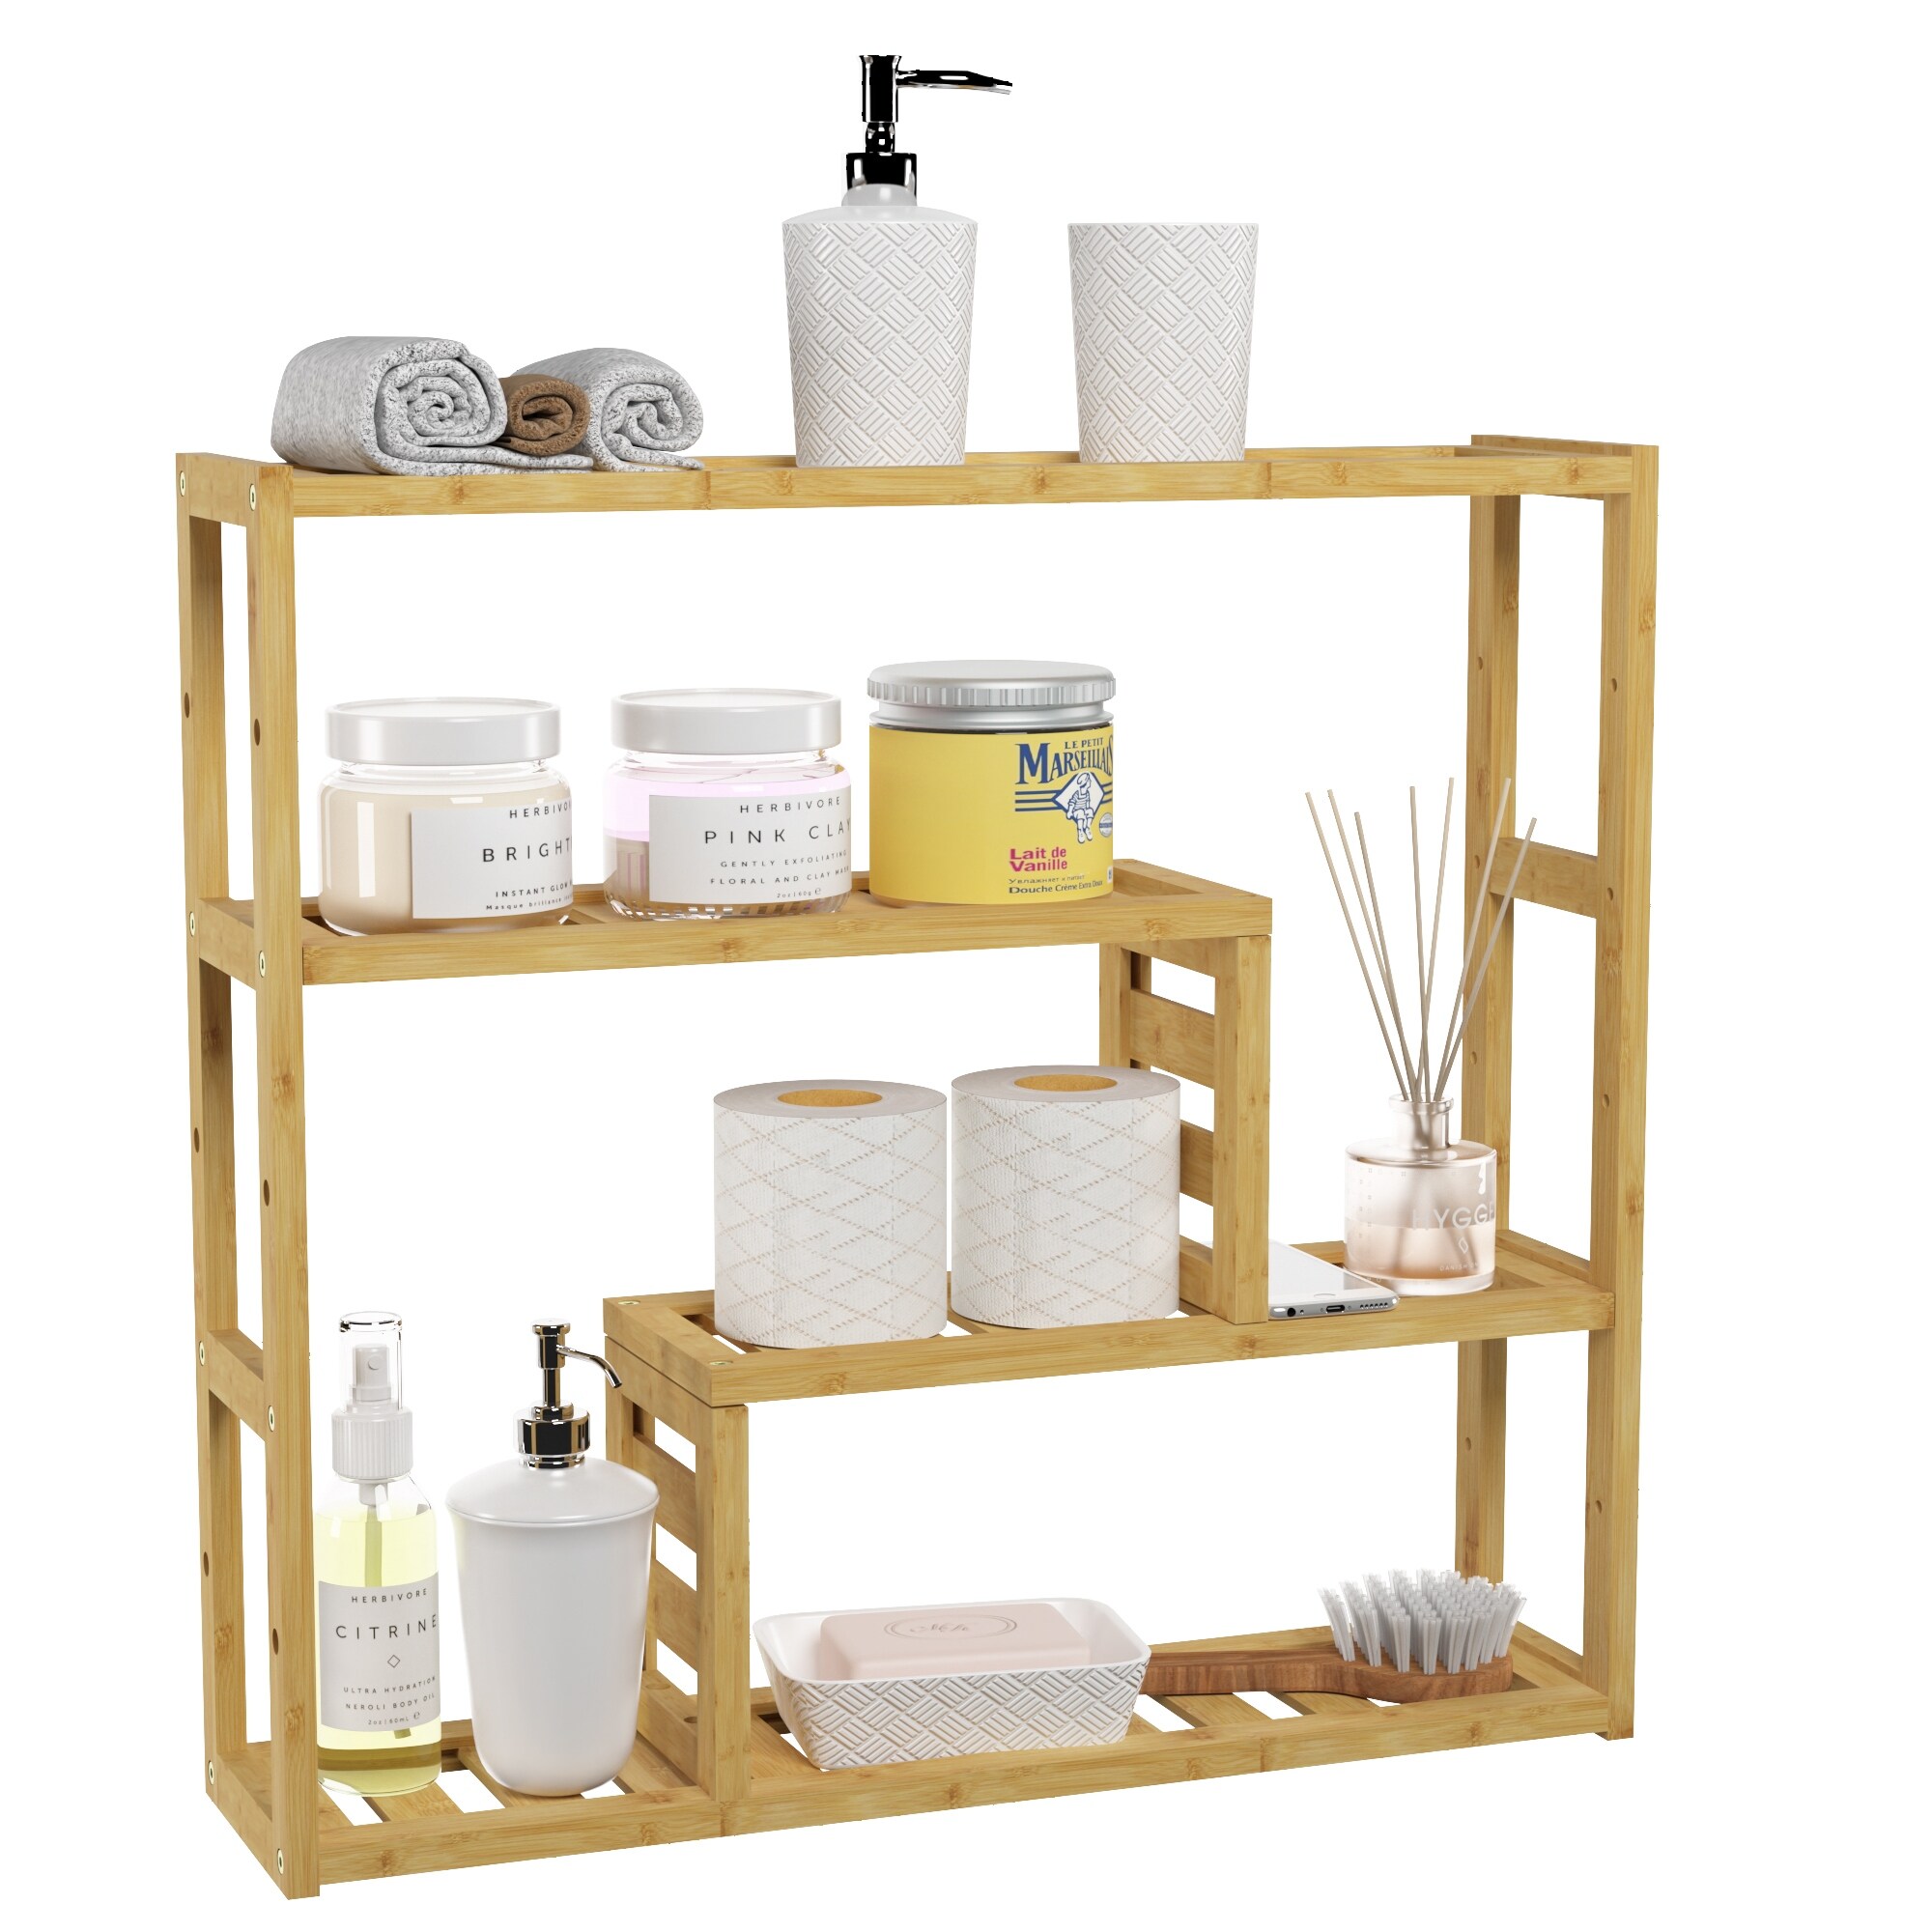 https://ak1.ostkcdn.com/images/products/is/images/direct/85c5d4e8978749484be8ce0b3b18676e391ba208/Elephance-Adjustable-Bamboo-Bathroom-Shelf-Over-Toilet-3-Tier-Bathroom-Wall-Shelf-for-Towel-Storage-Bath-Accessories-Organizer.jpg